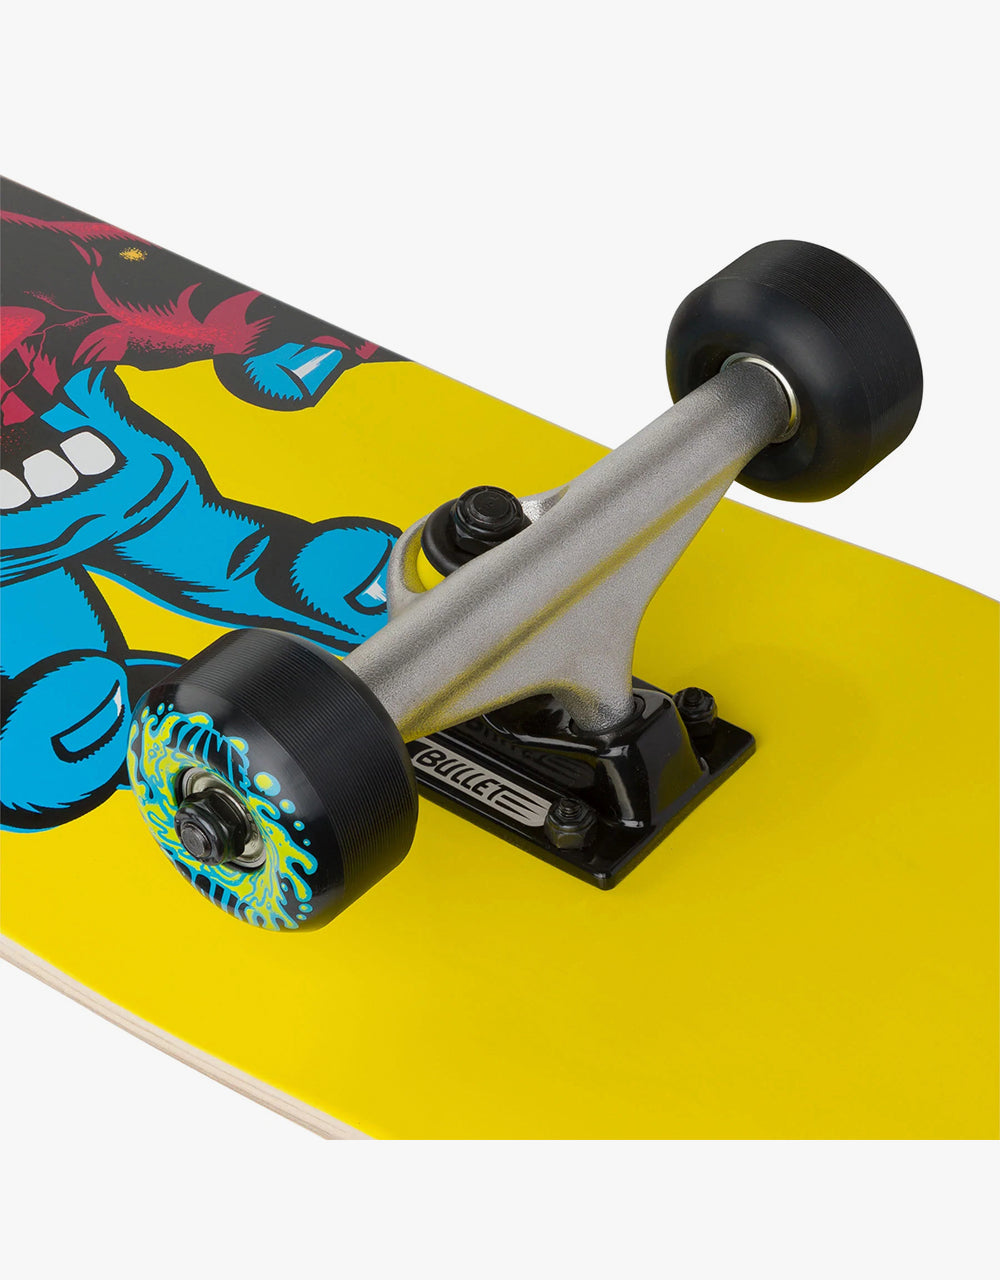 Santa Cruz x Stranger Things Screaming Hand Complete Skateboard - 8"